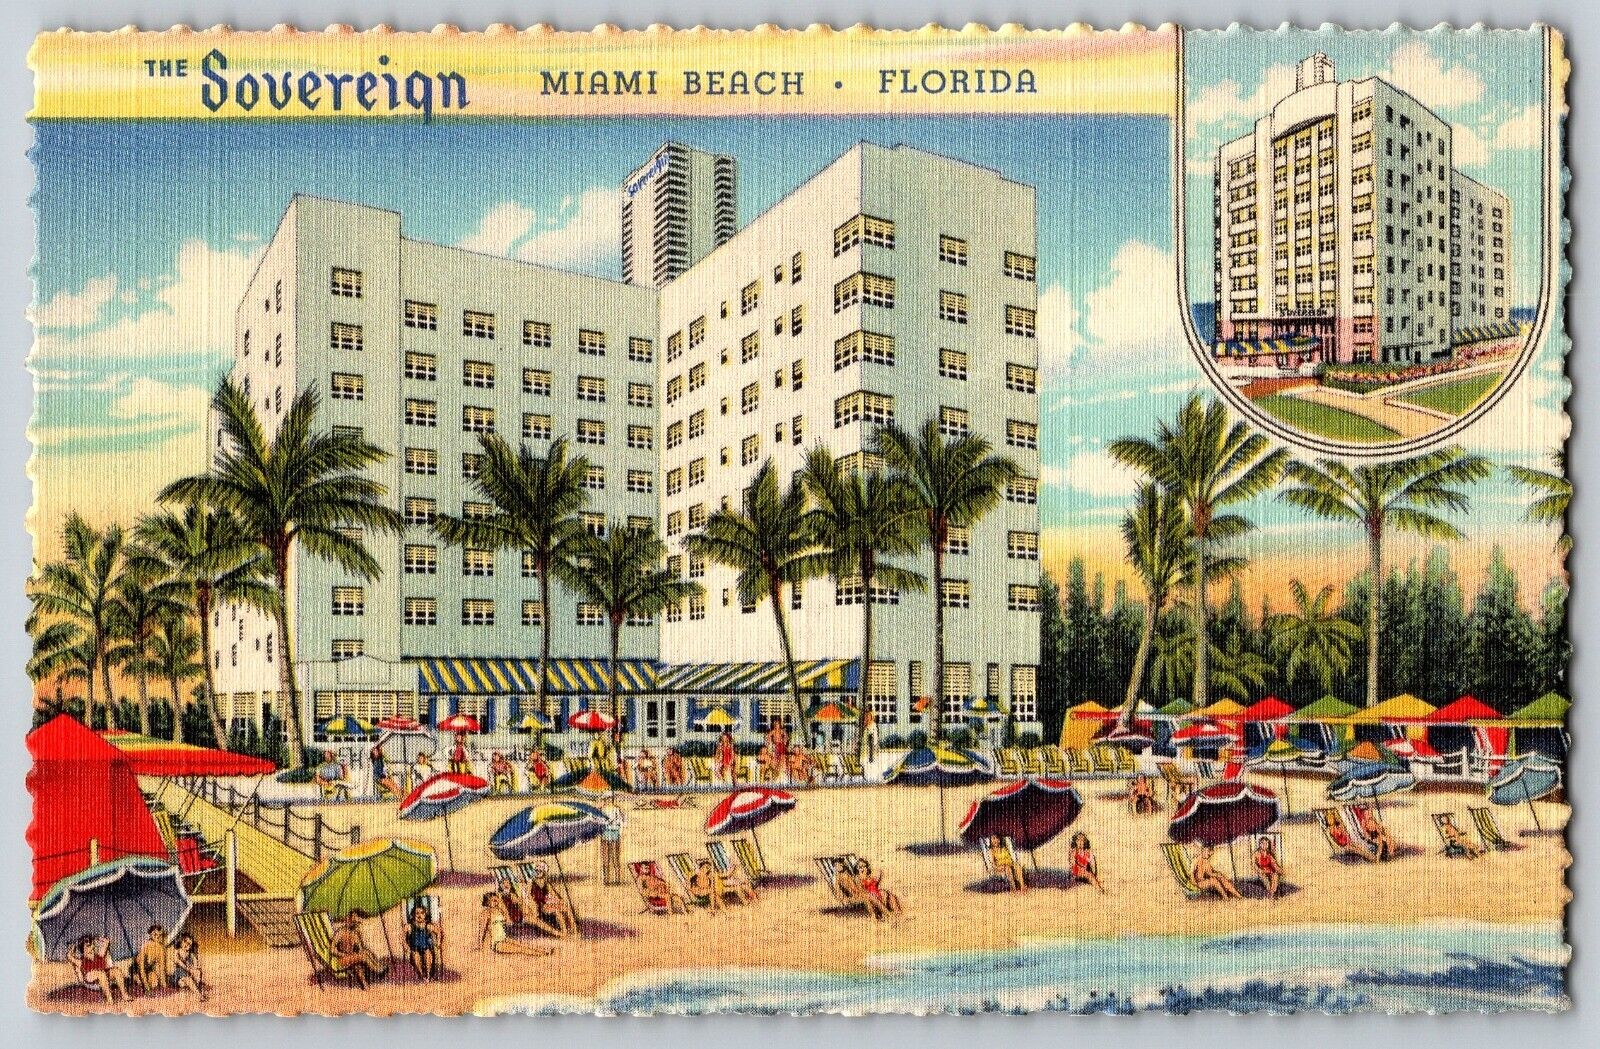 Miami Beach, Florida FL - The Sovereign Hotel, Private Beach - Vintage Postcard